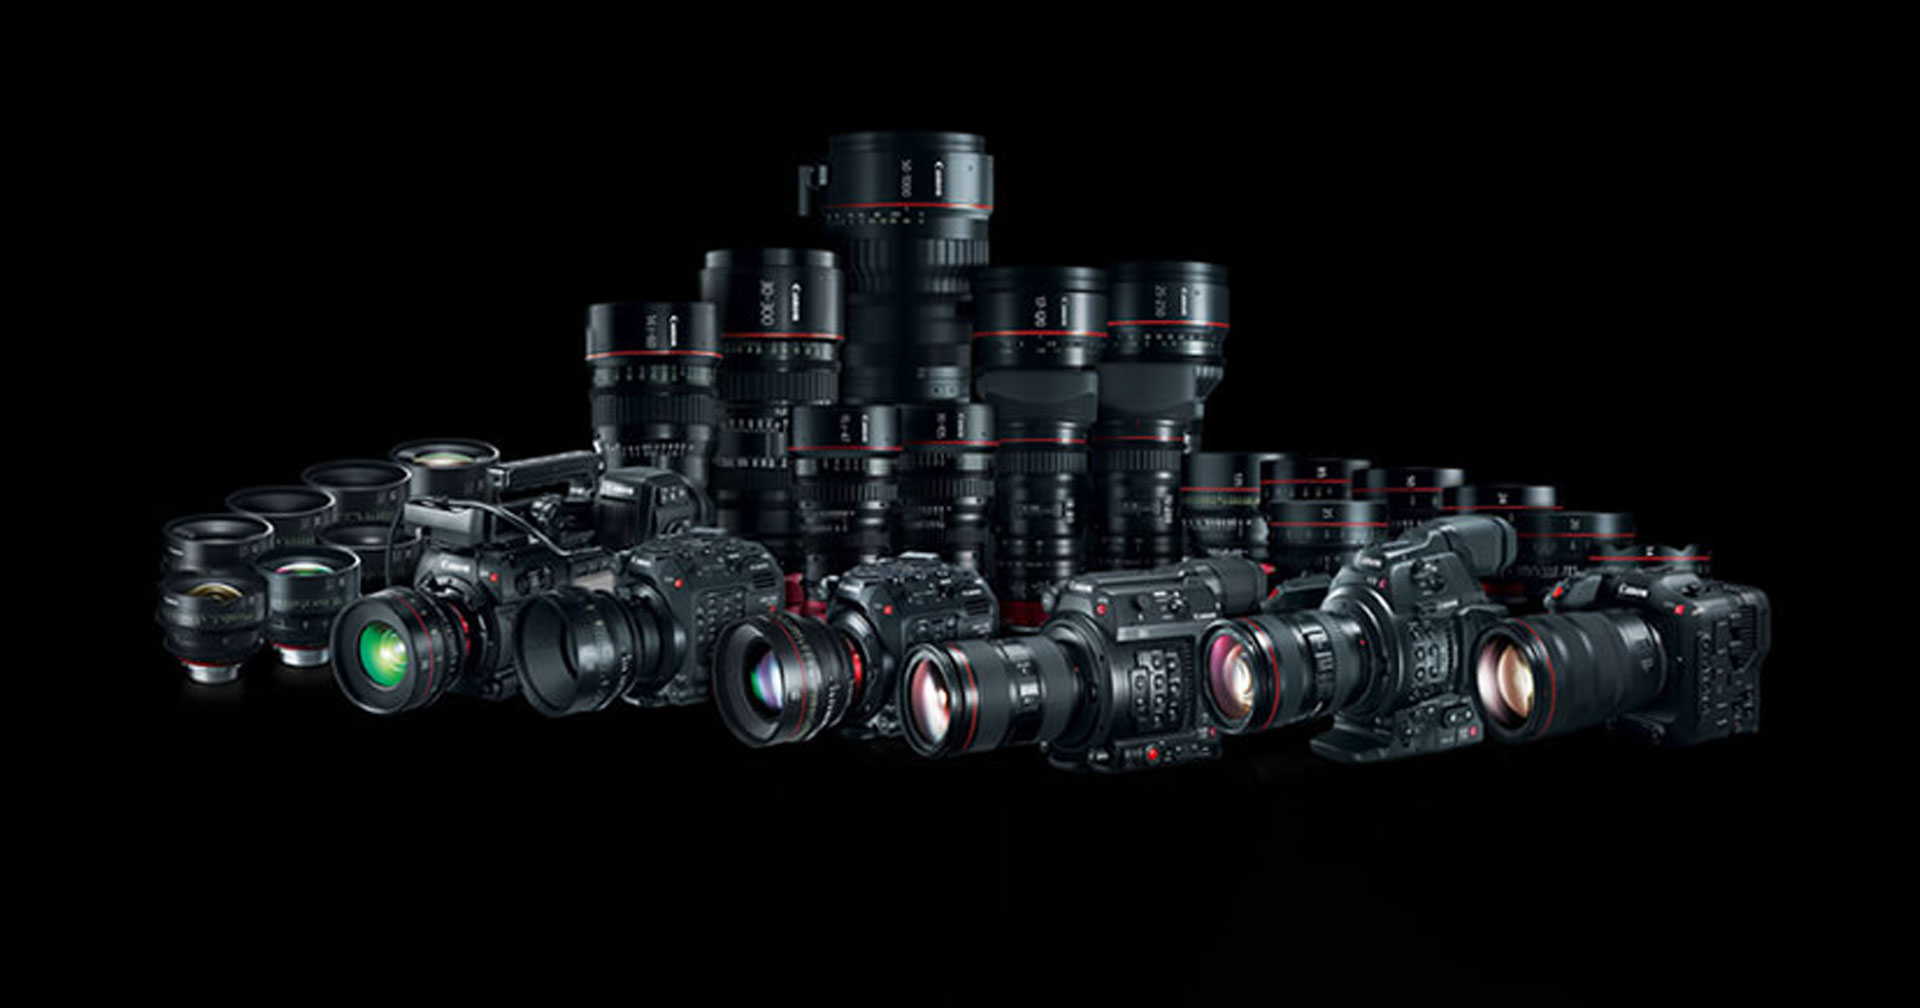 Canon เตรียมเปิดตัว 2 เลนส์ซูมรุ่นใหม่ สำหรับกล้อง Cinema ในเดือนหน้า!